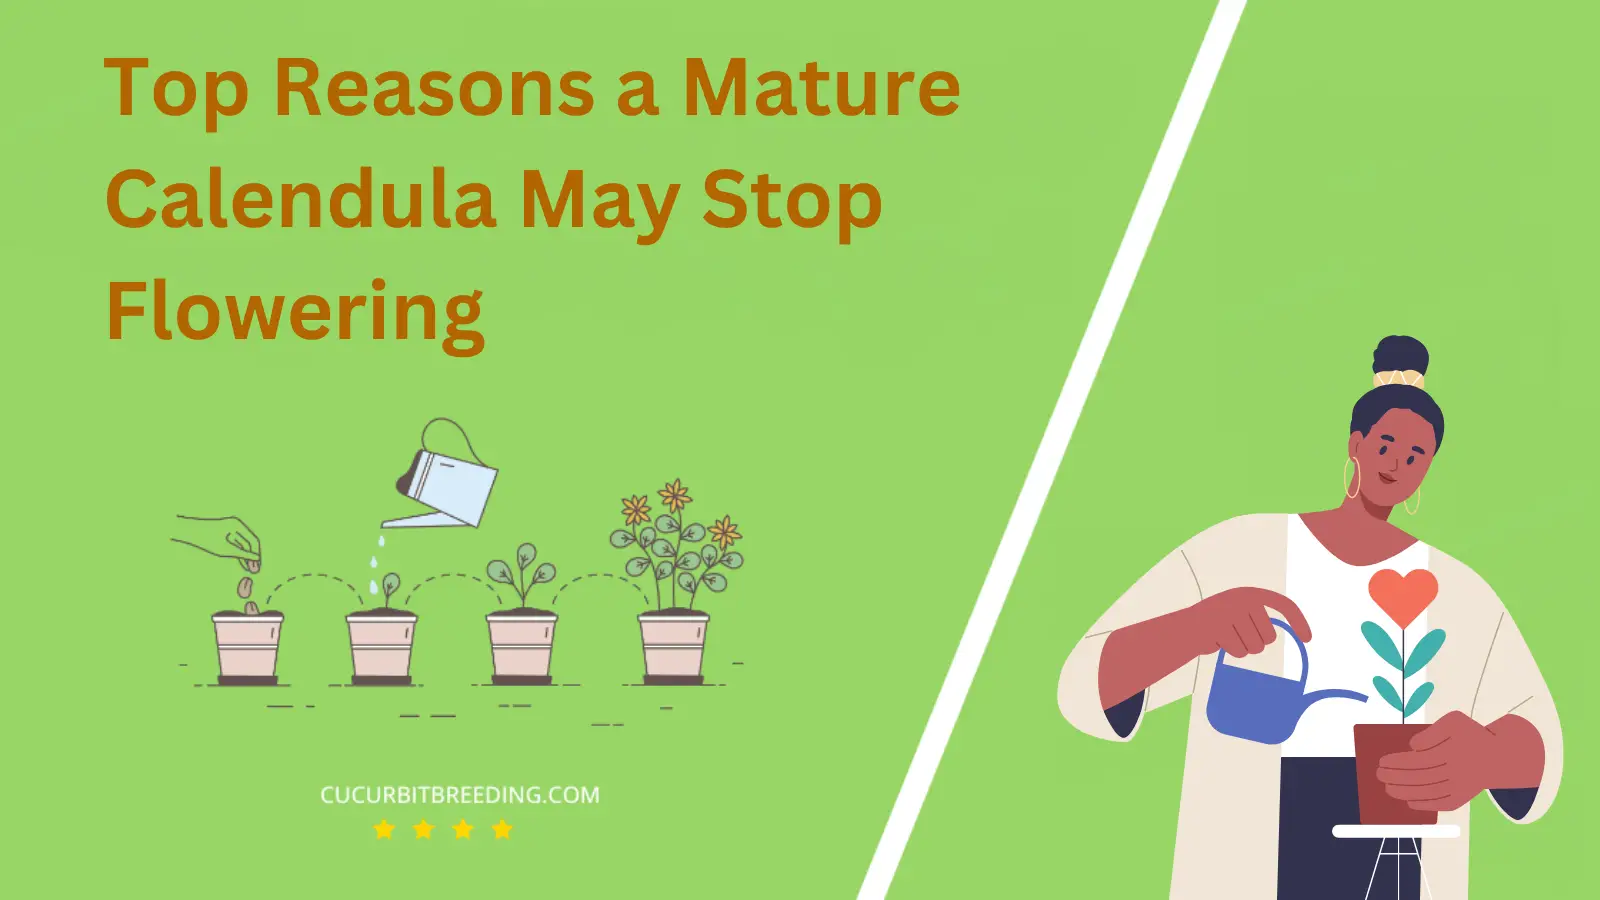 Top Reasons a Mature Calendula May Stop Flowering